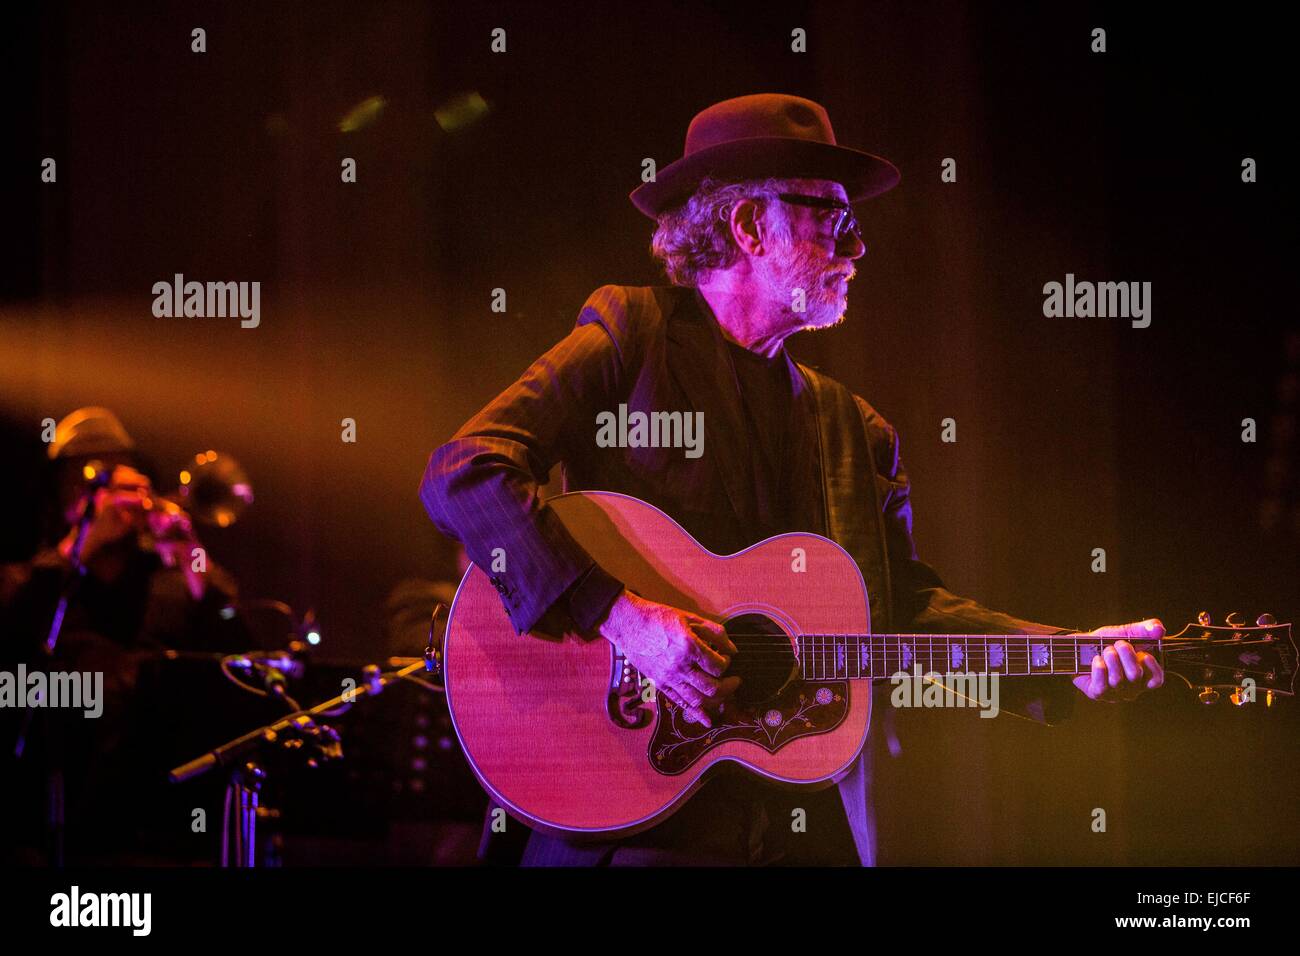 Francesco De Gregori performs live at Mediolanum Forum in Assago Milan, Italy © Roberto Finizio/Alamy Live News Stock Photo